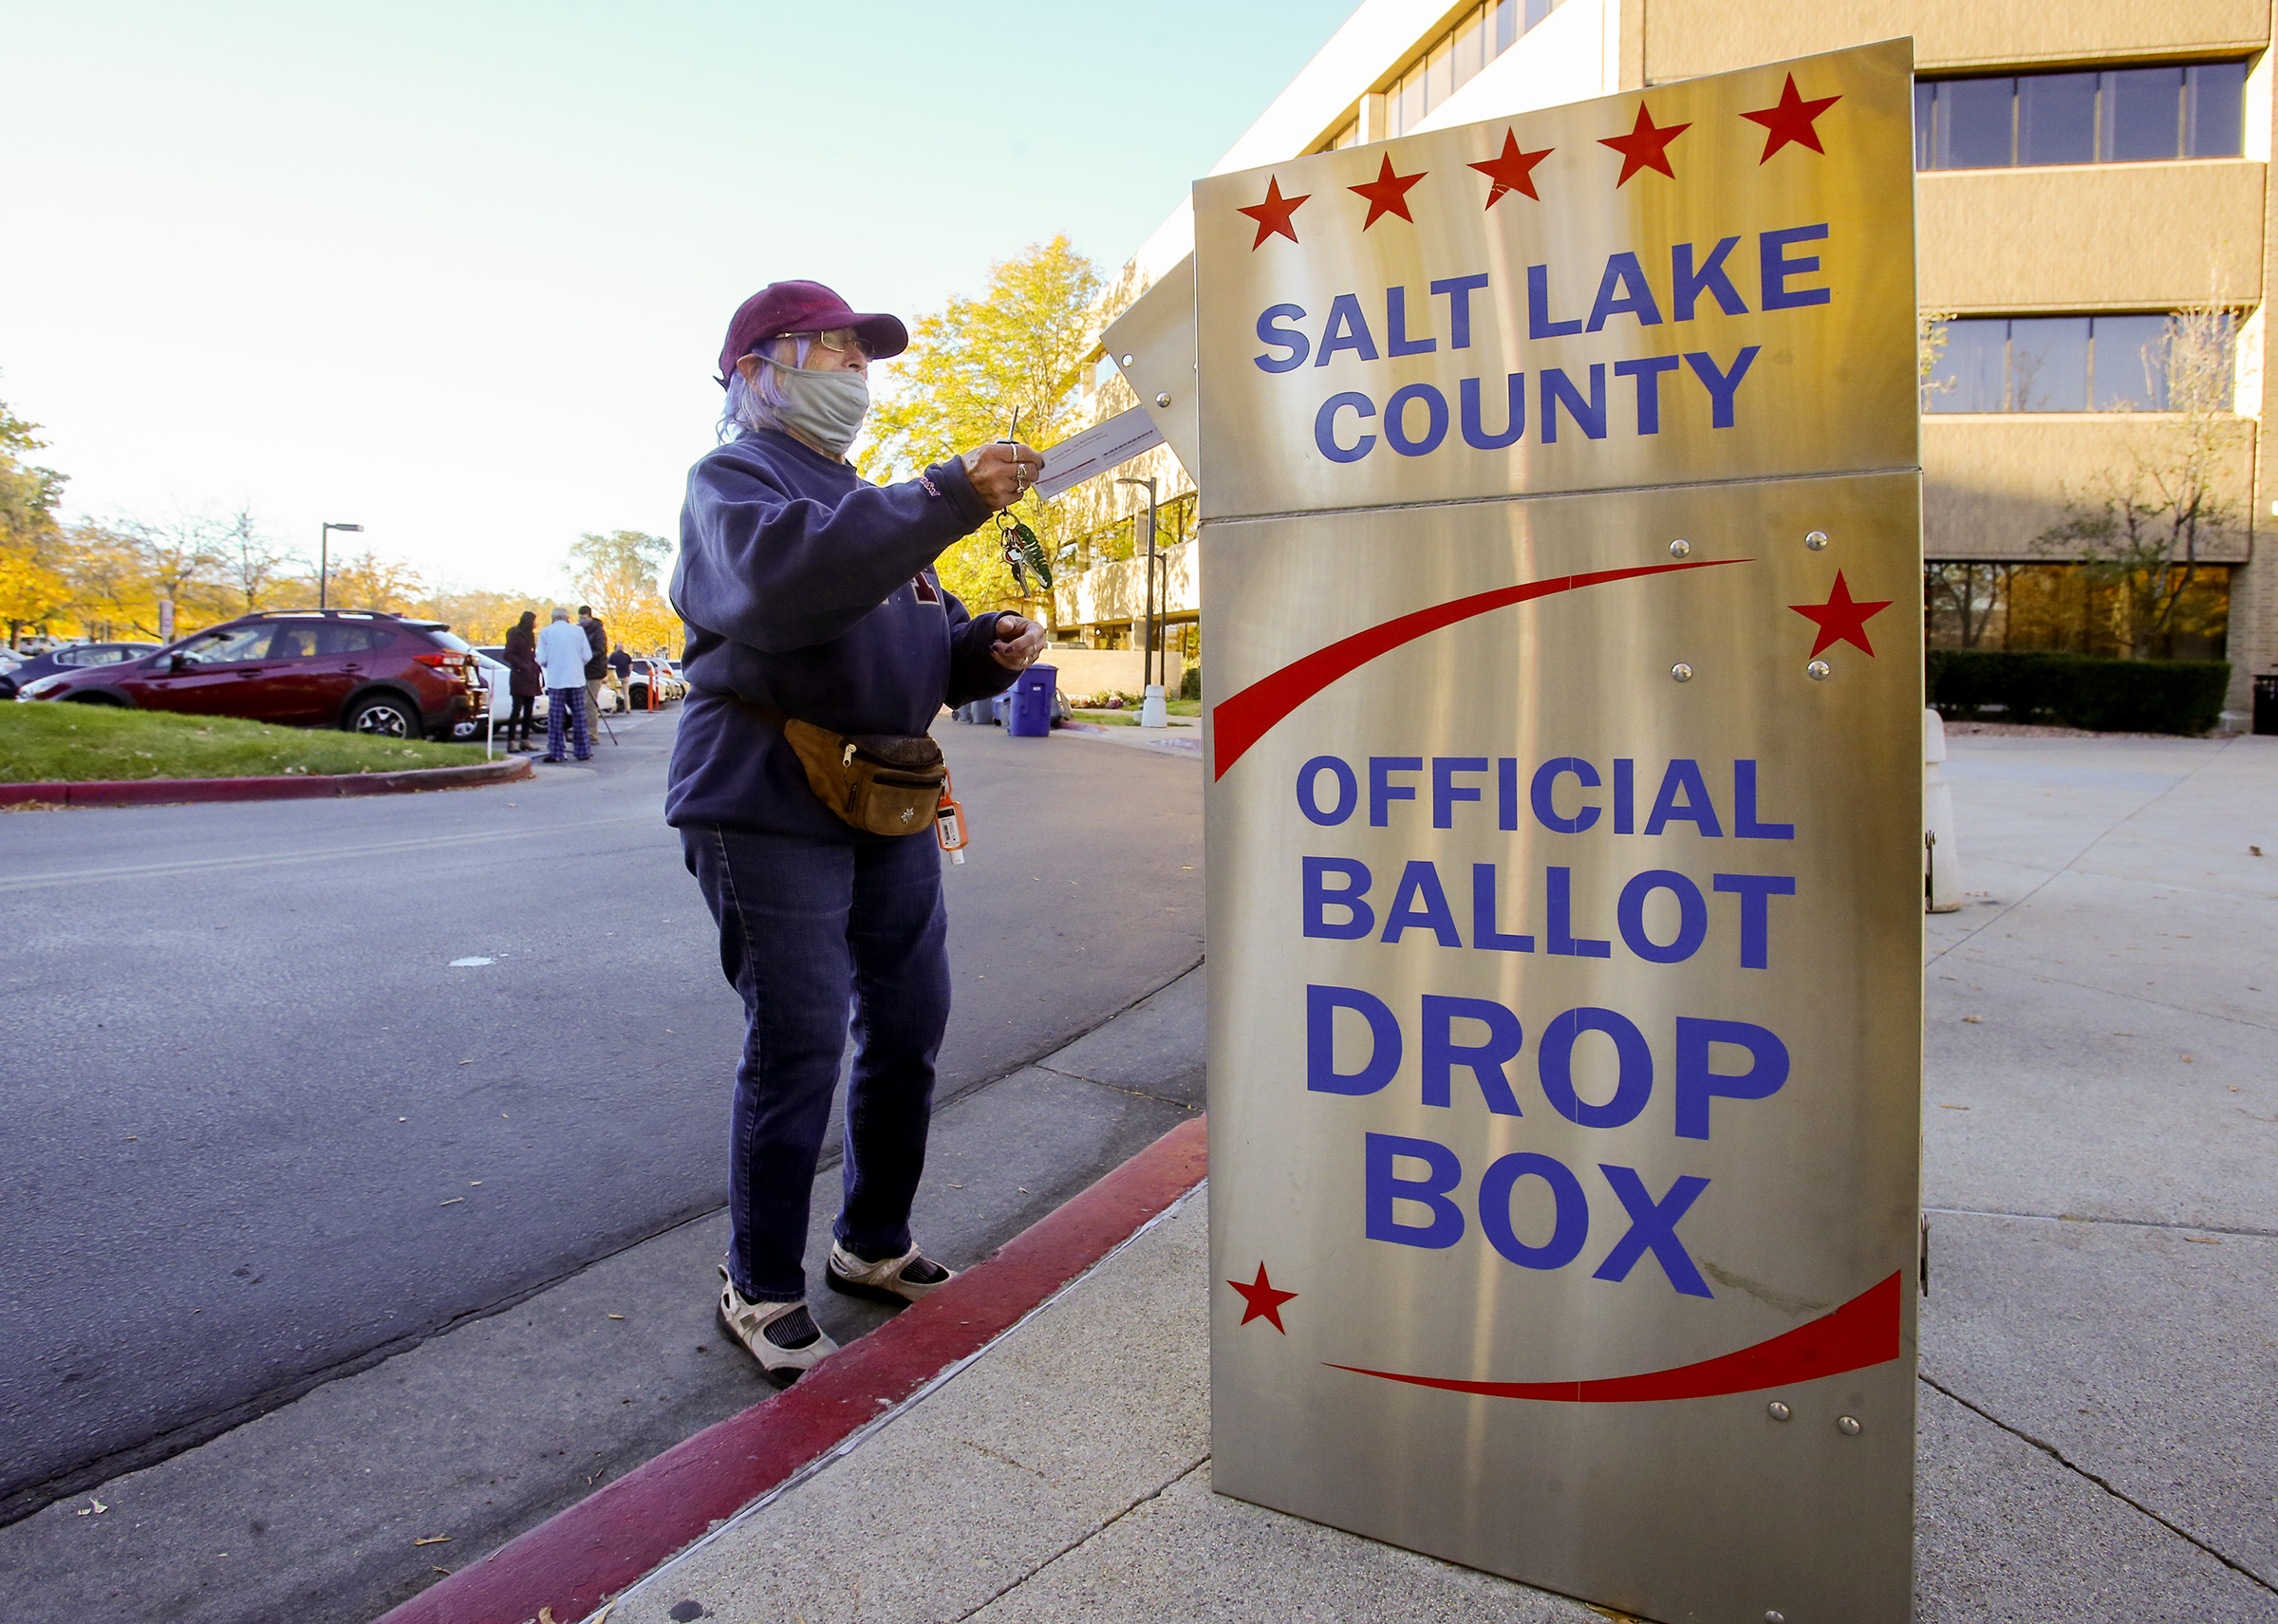 A voter puts a ballot into an official drop box.